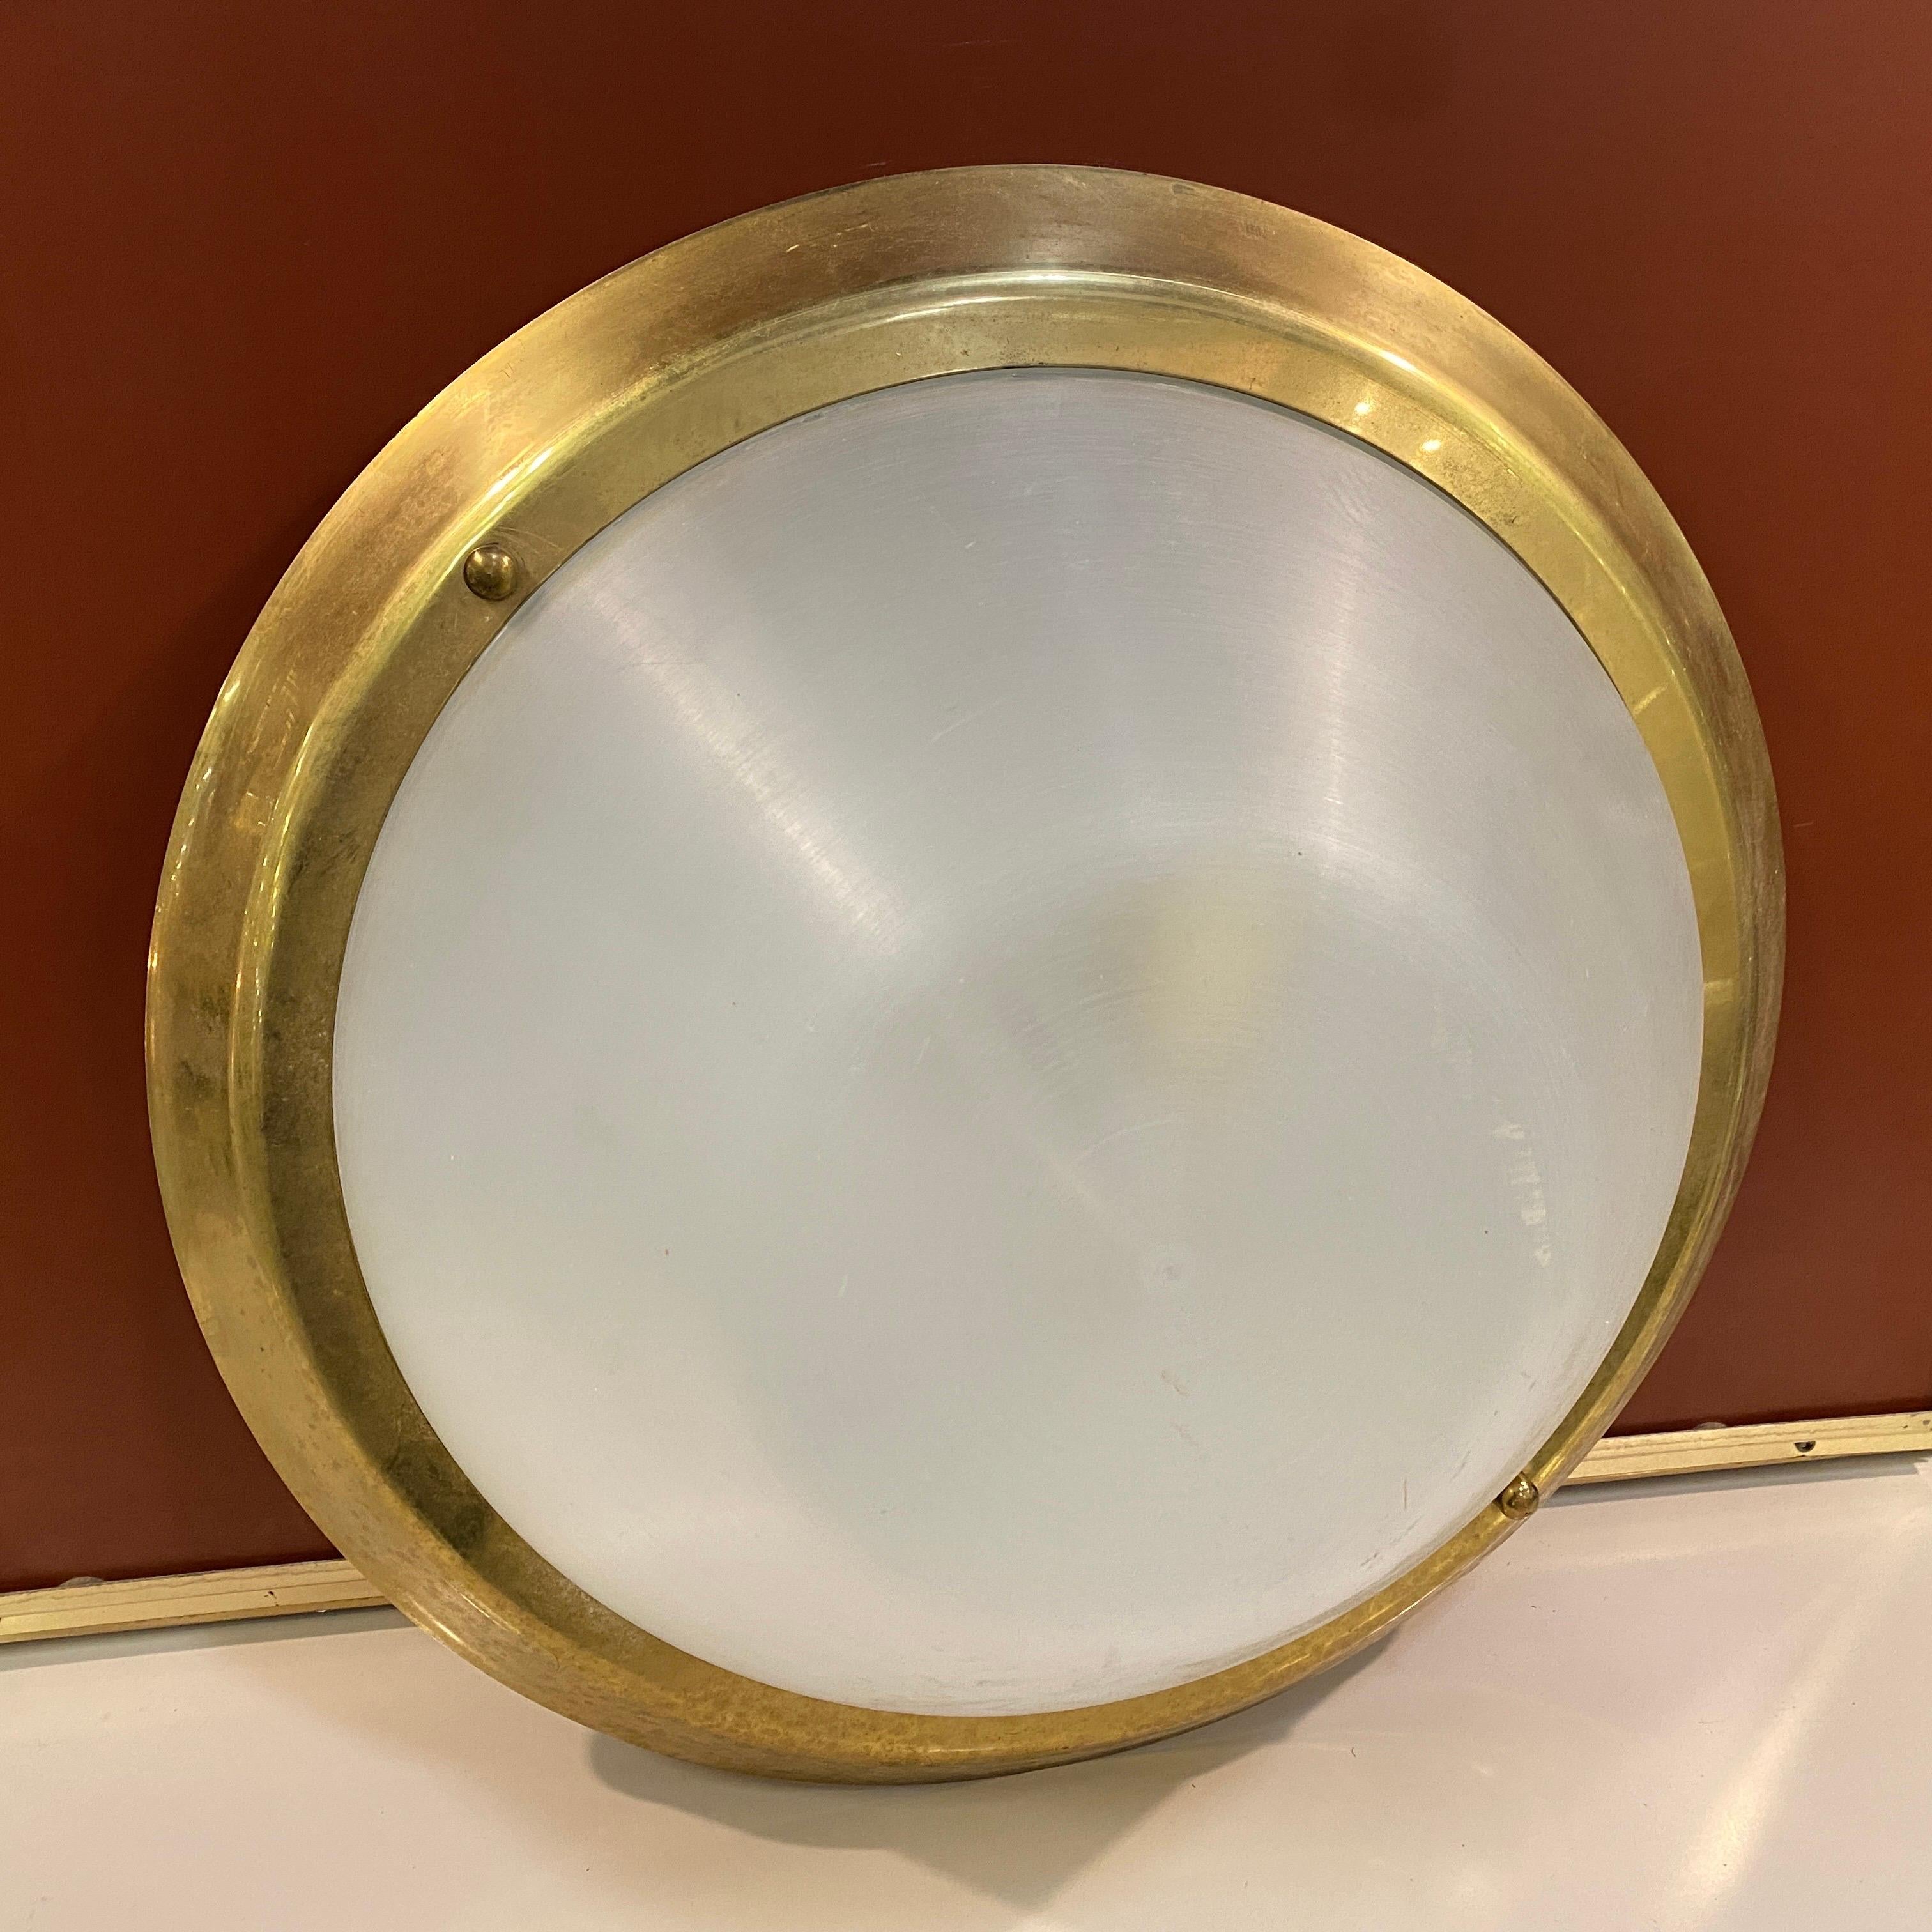 1970s Mid-Century Modern Brass and Plexiglass Round Italian Ceiling Light For Sale 1